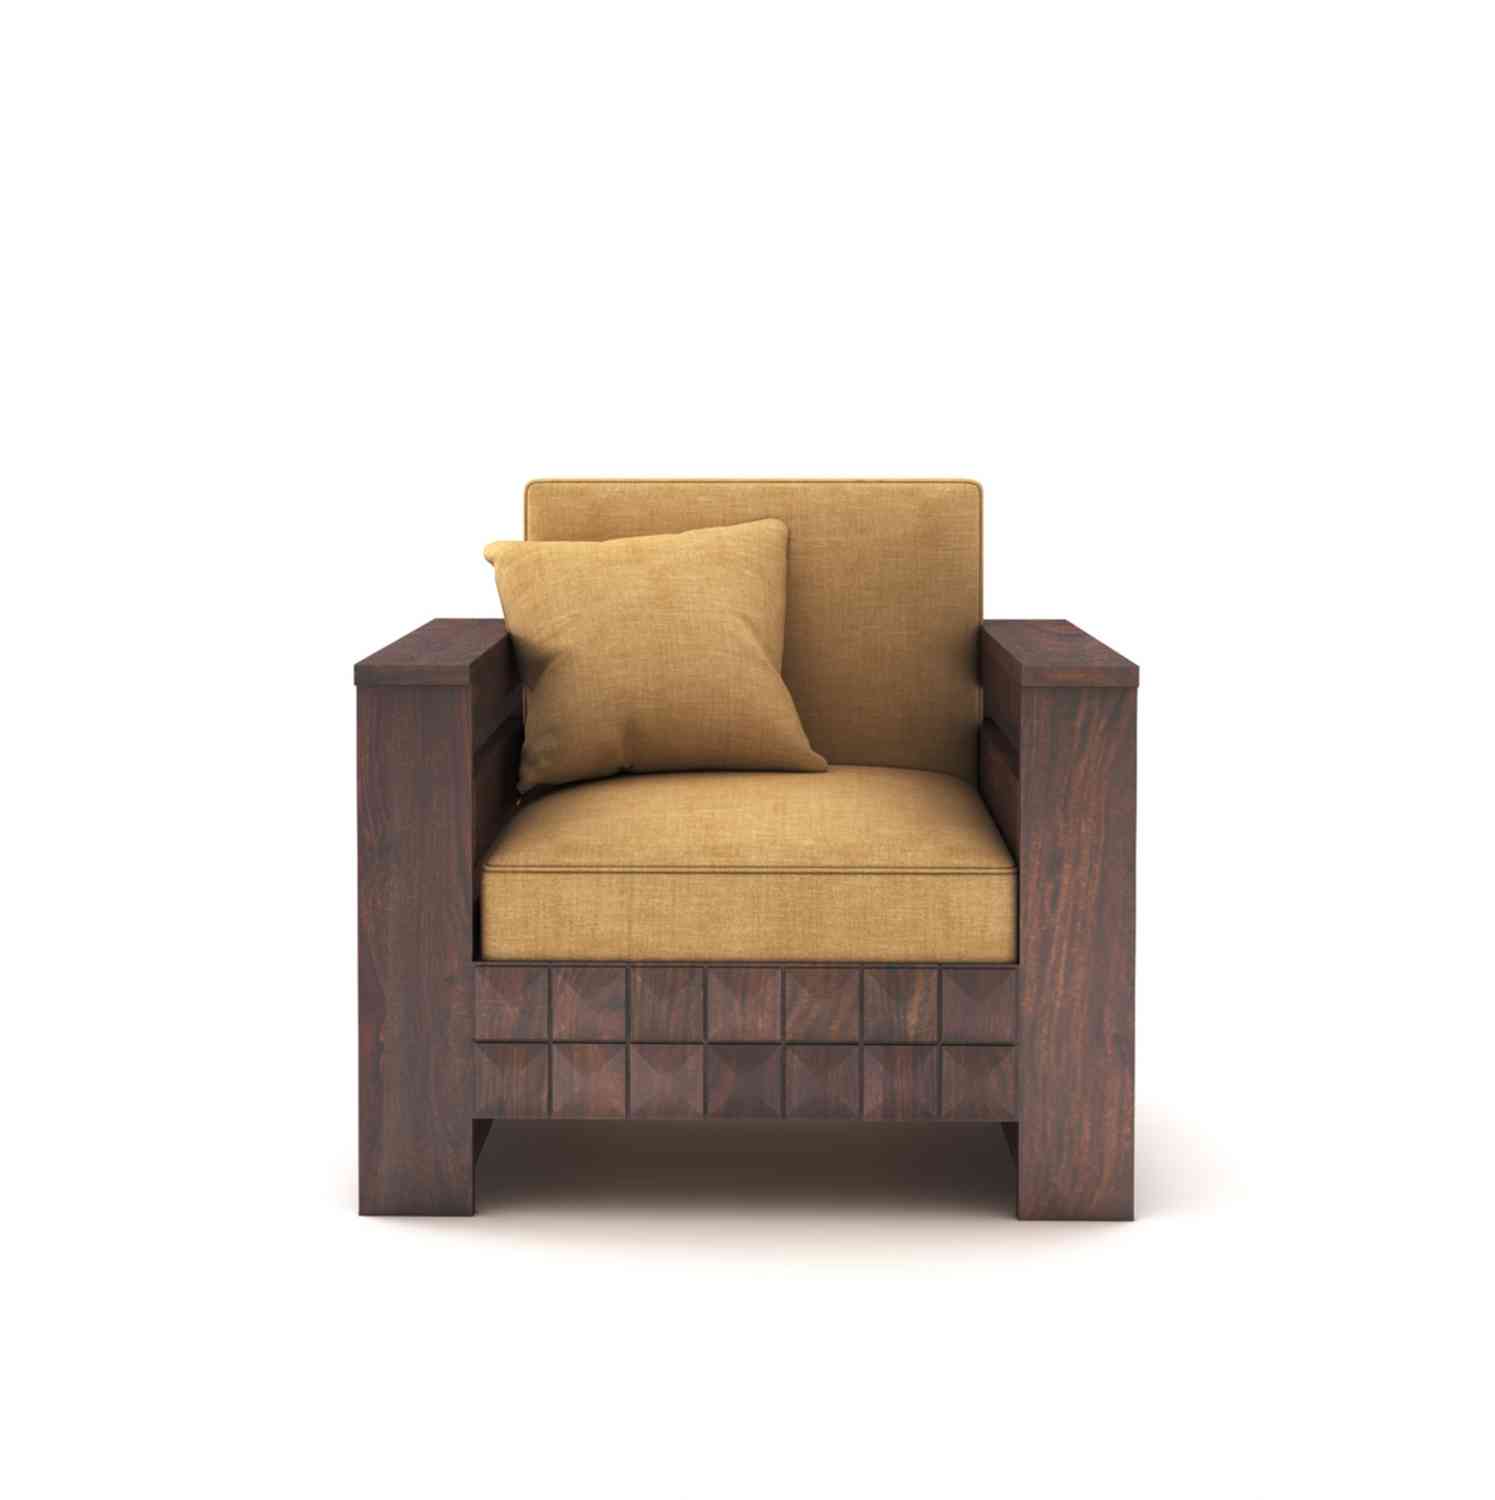 Sofia Solid Sheesham Wood Single Seater Sofa (Walnut Finish)